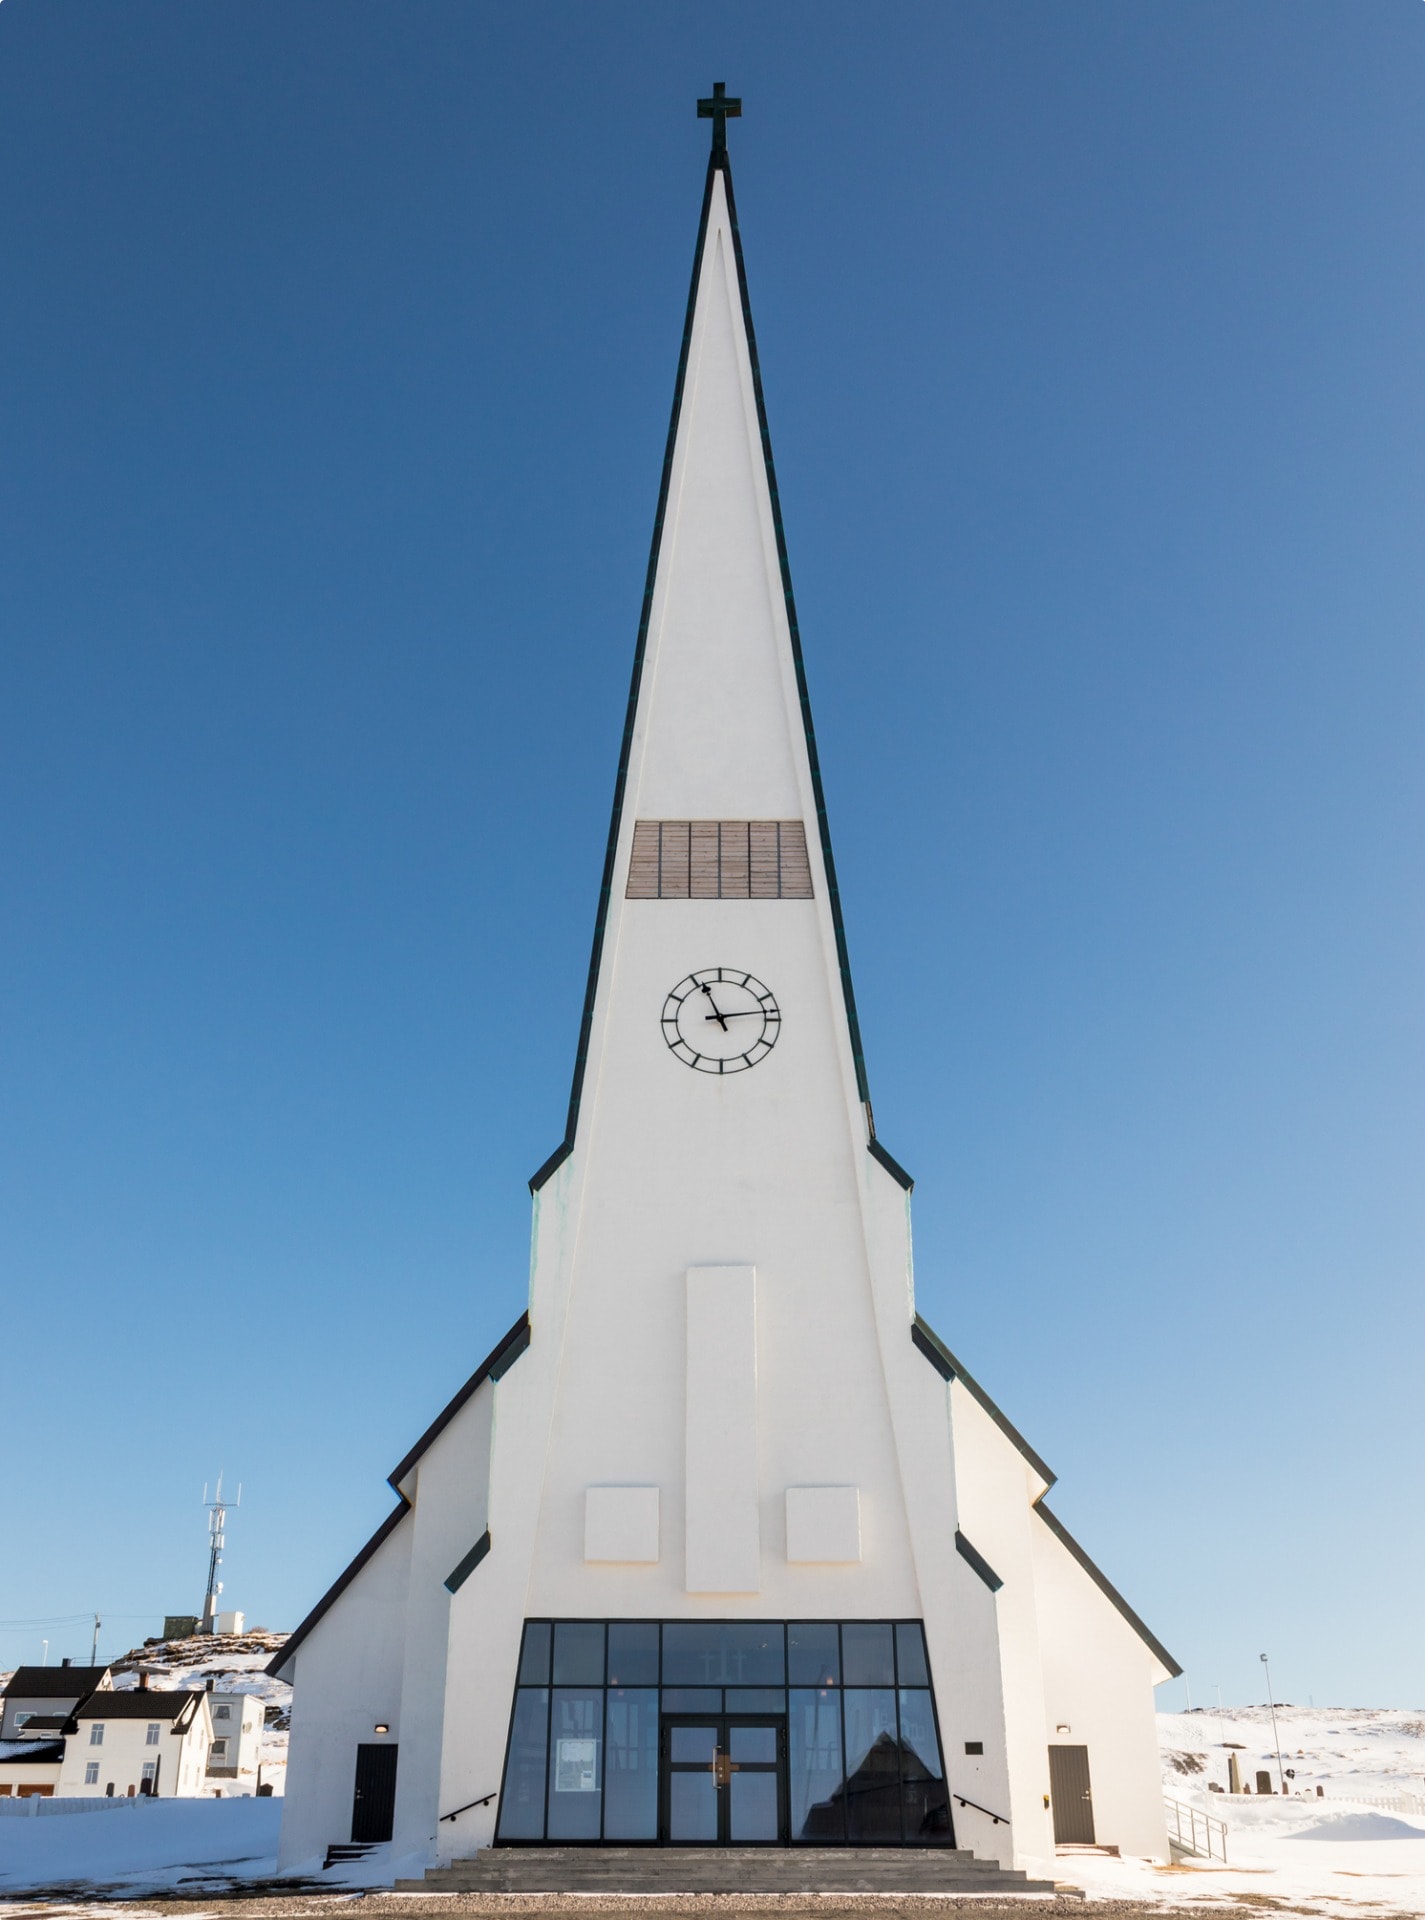 Vardo Church - Finnmark county - Northern Norway